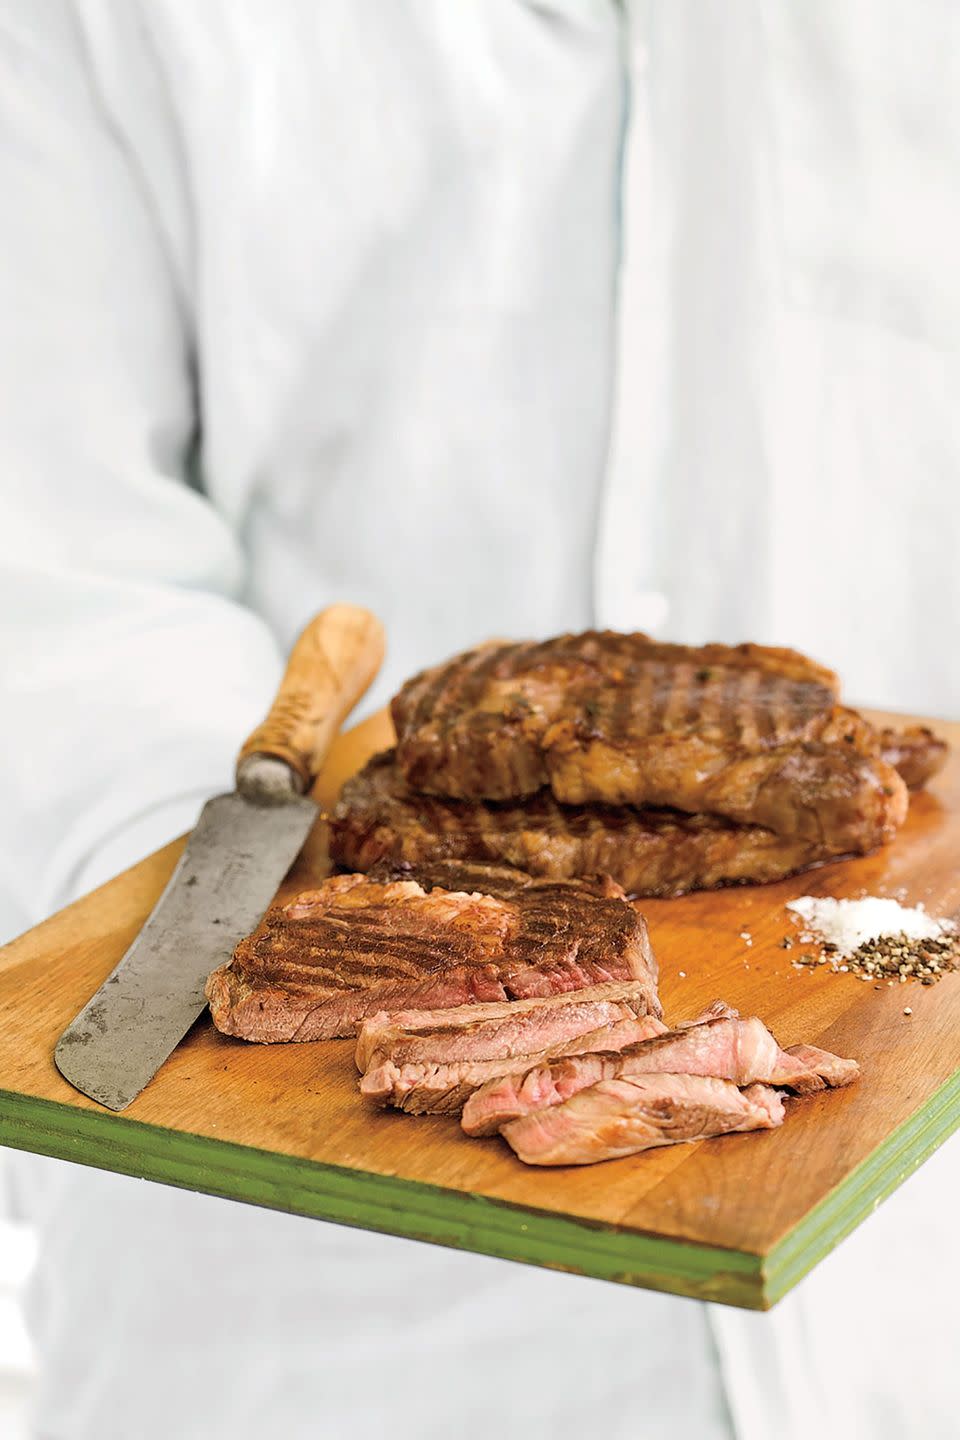 grilled ribeye steak on a wooden serving board